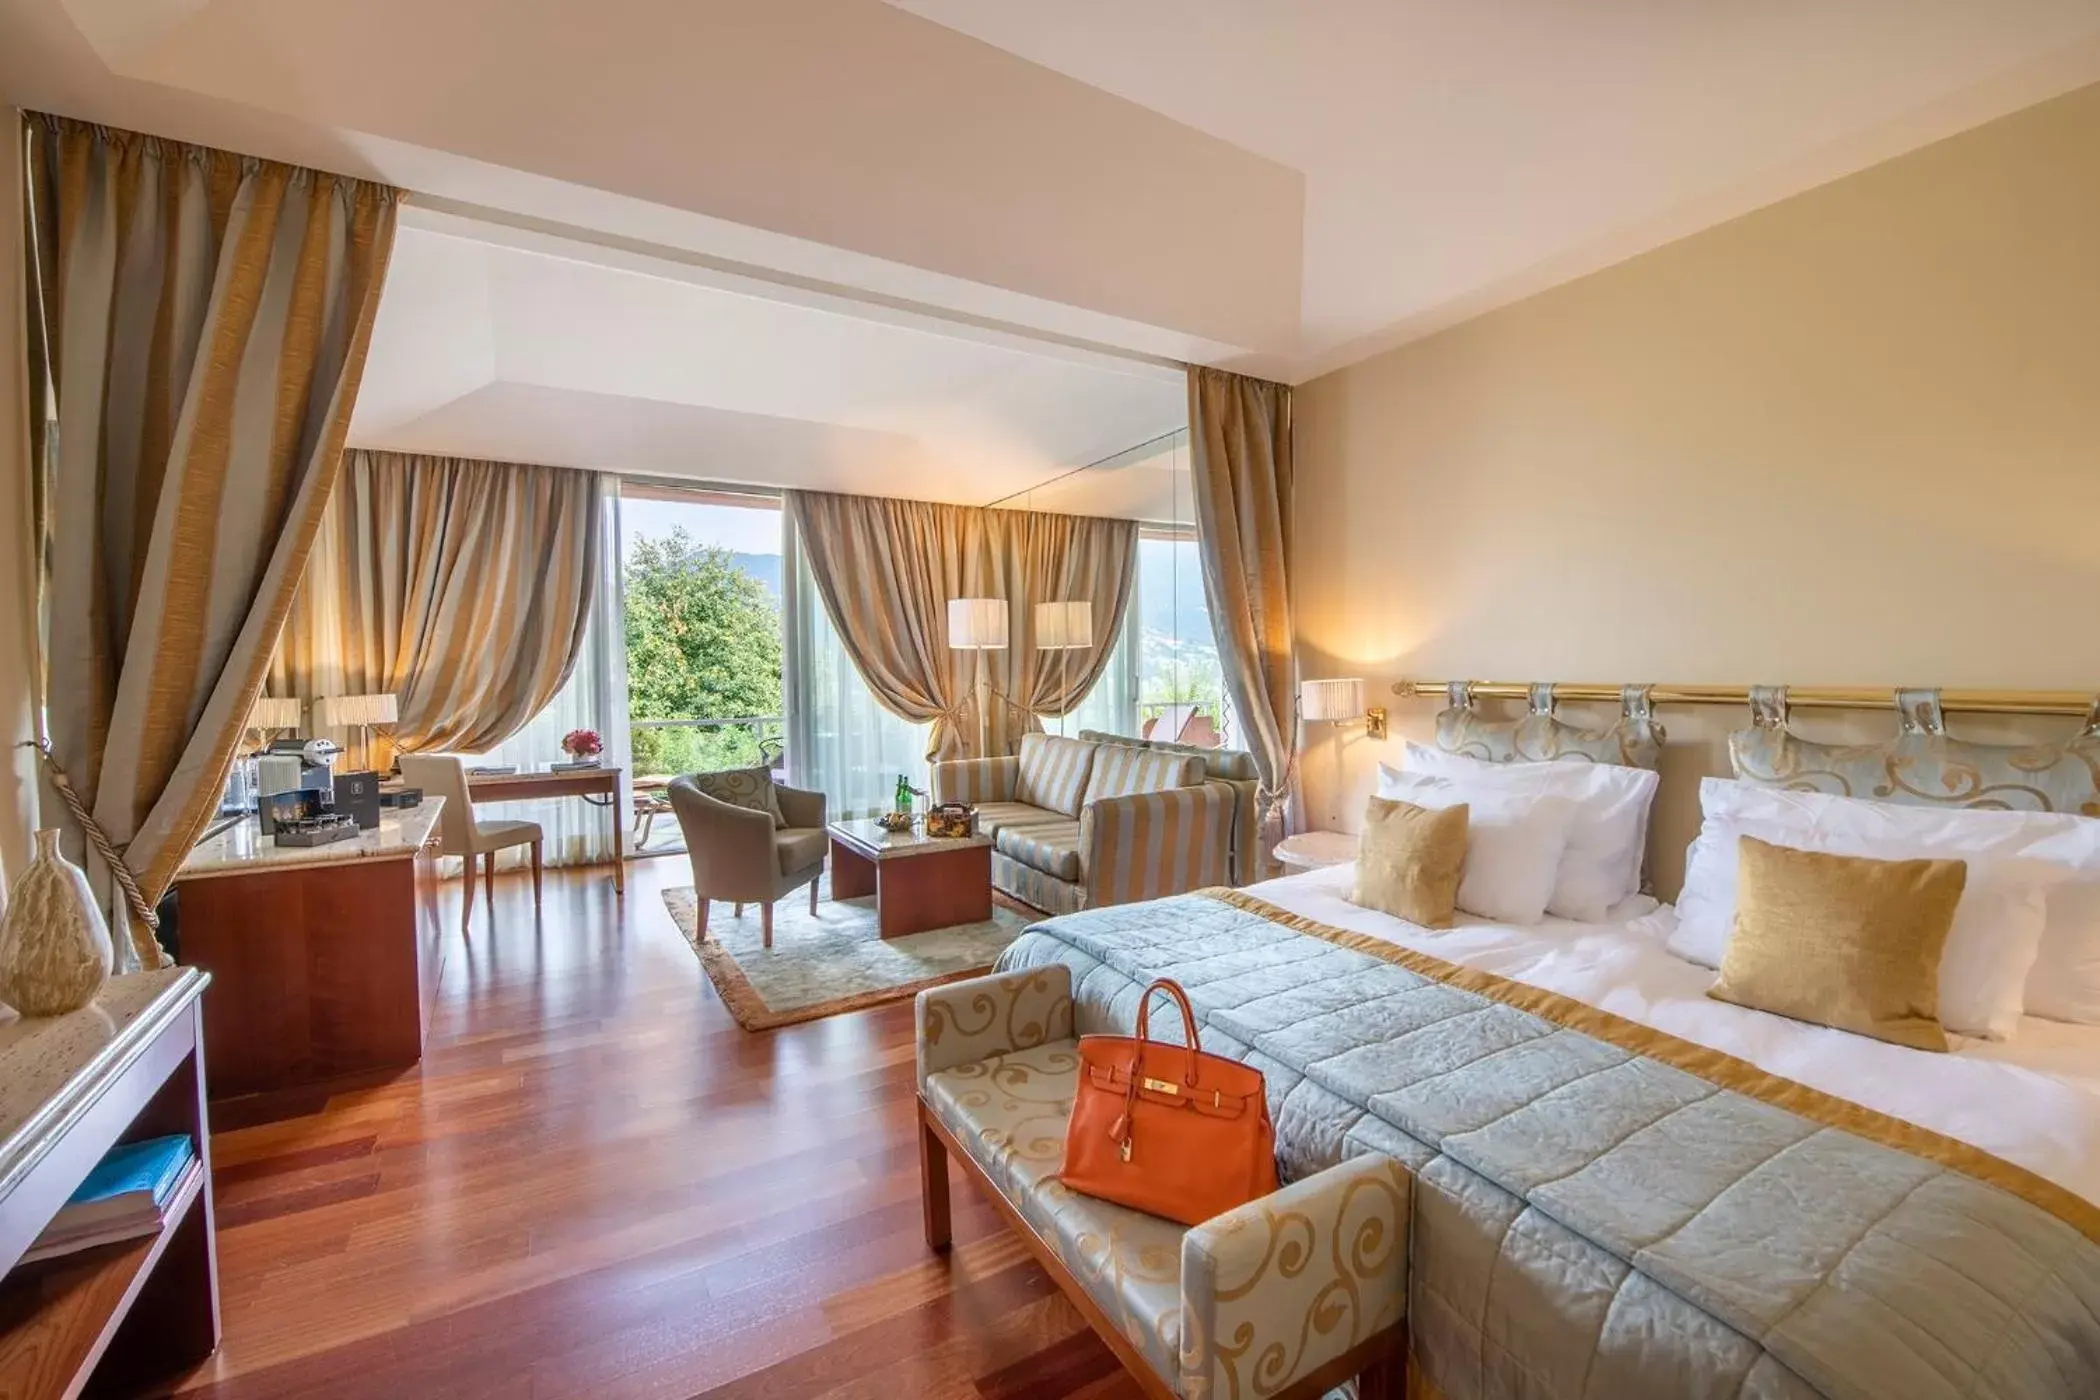 Bedroom in Villa Principe Leopoldo - Ticino Hotels Group